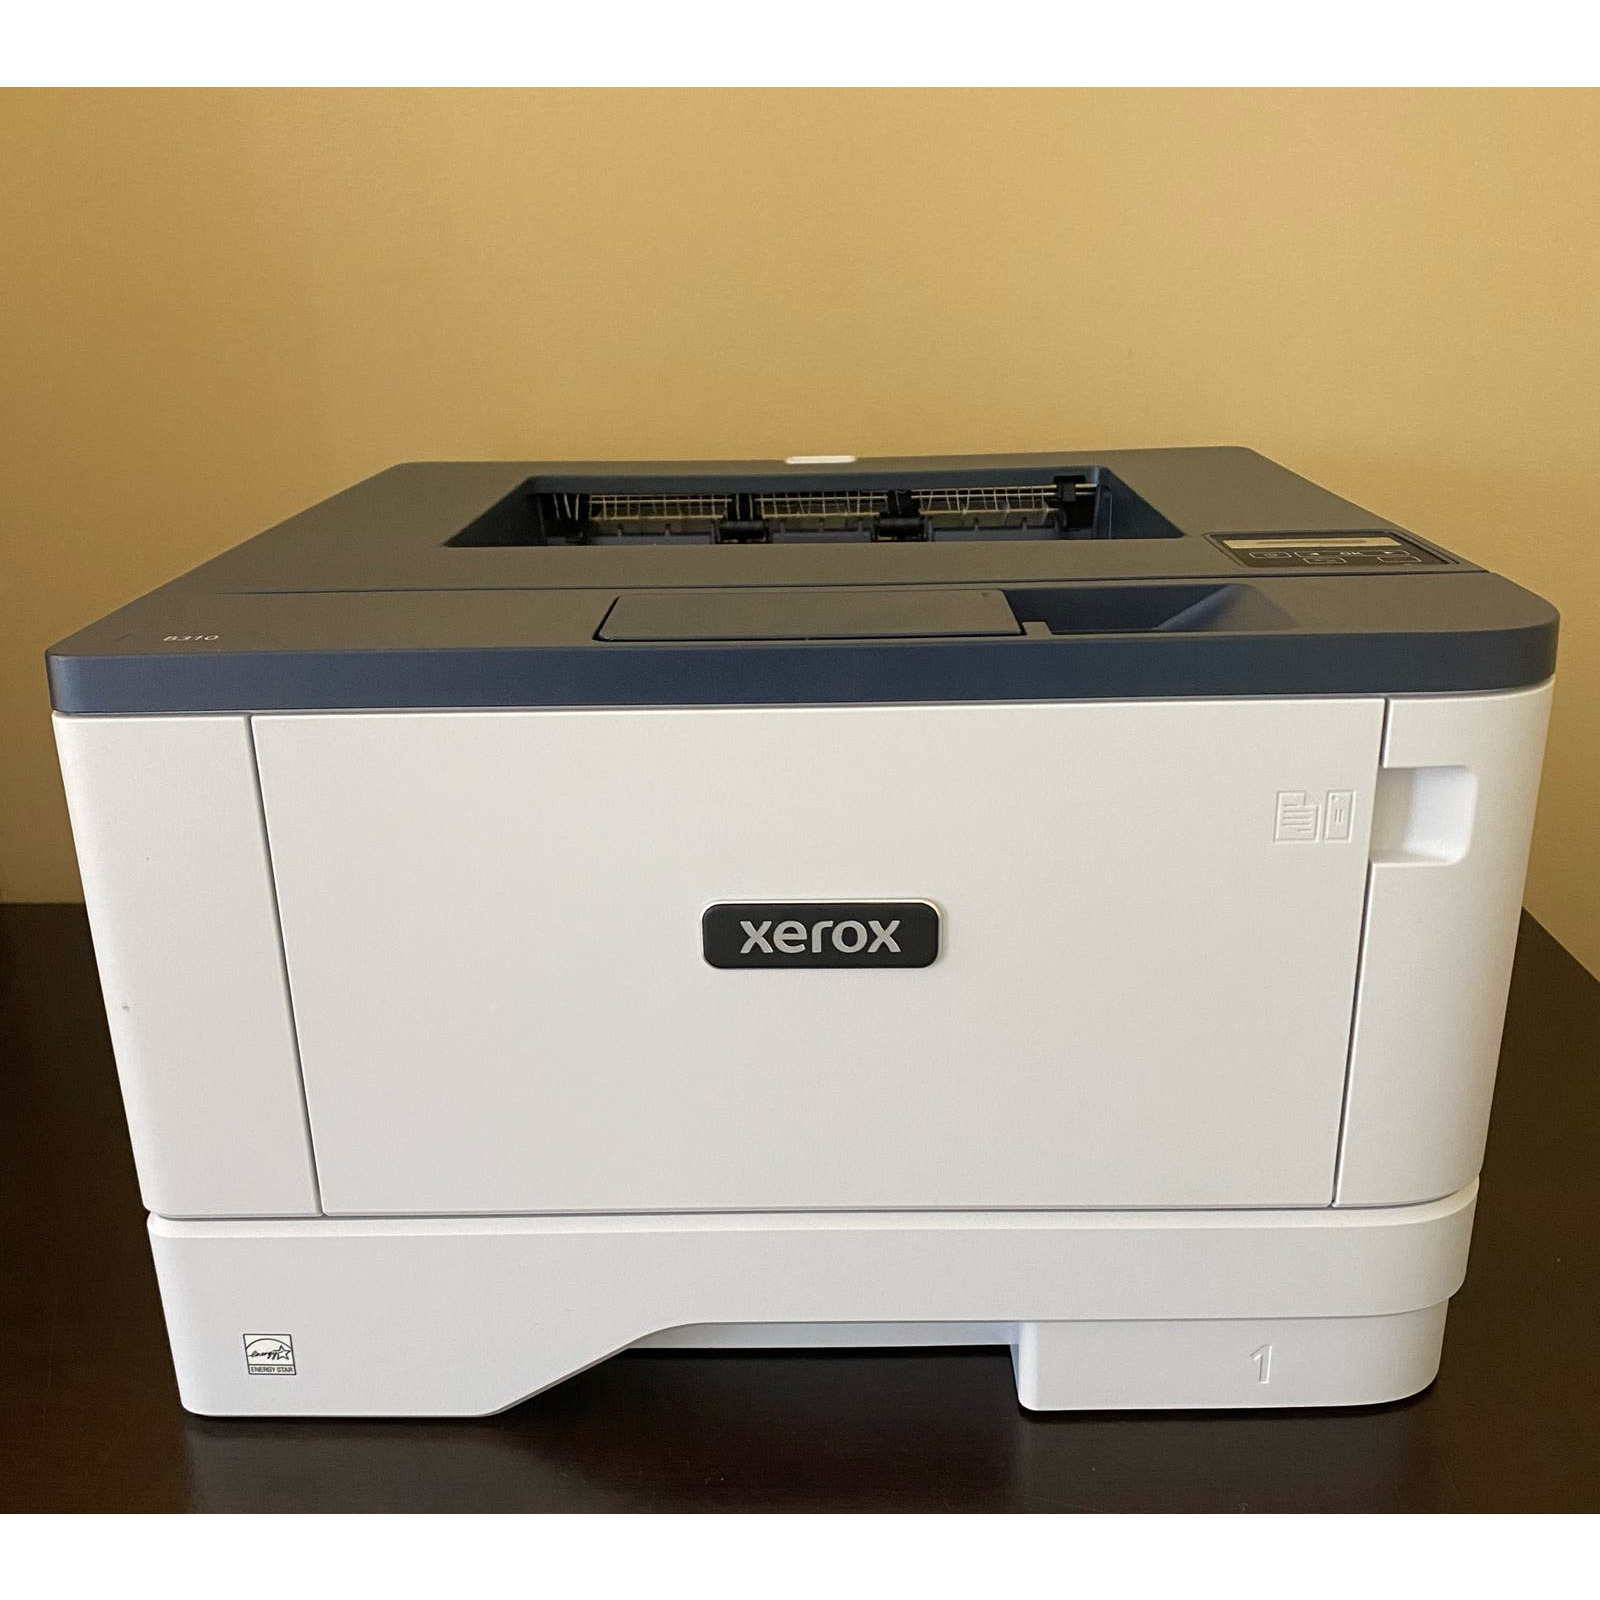 Xerox B310/DNI Printer, Black and White Laser, Wireless w / New Toner and Drum